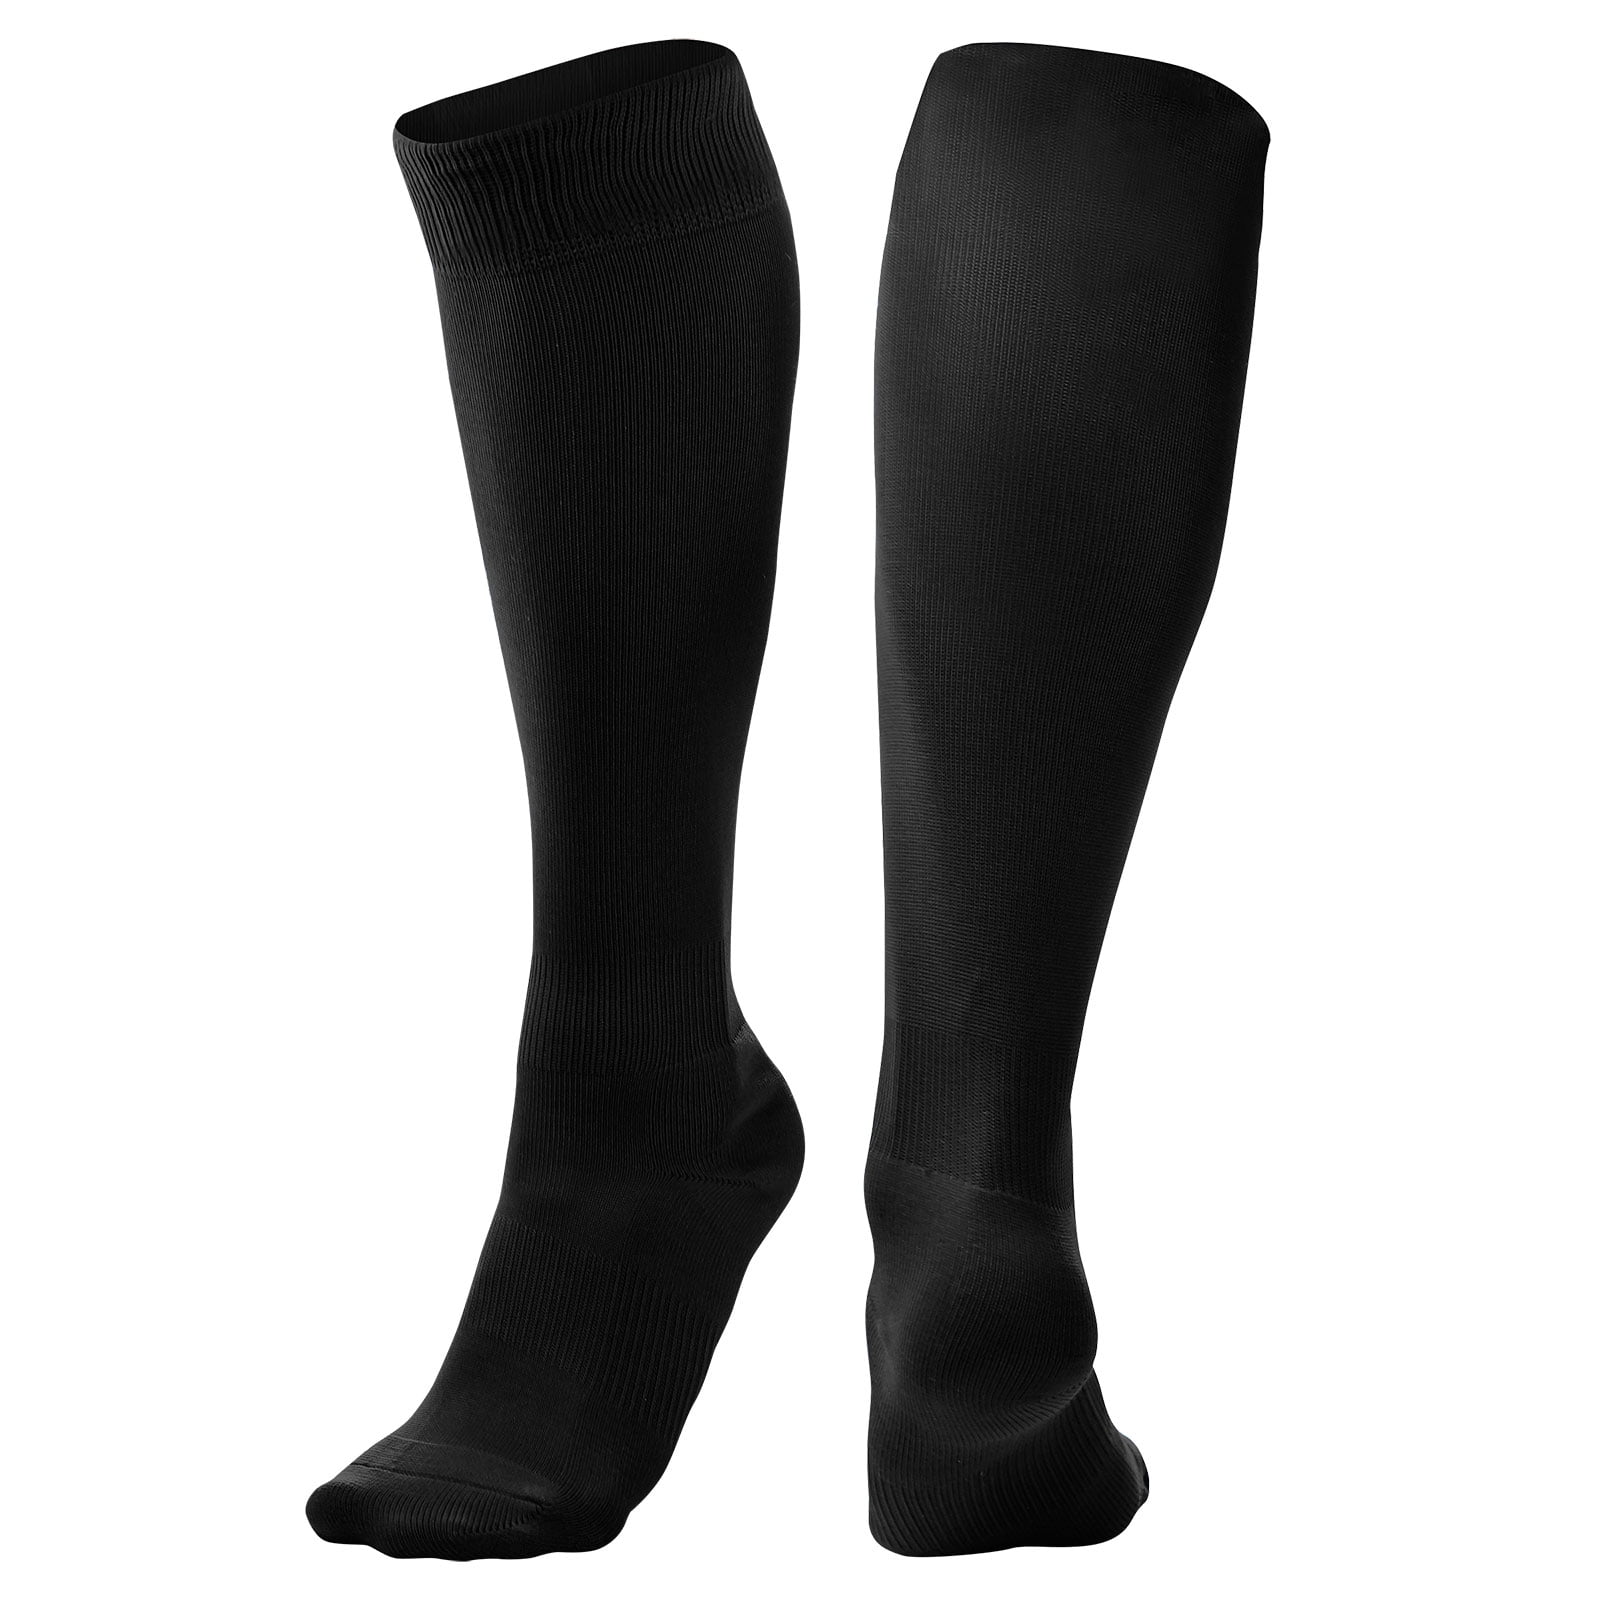 Professional Athletic Socks, 1 Pair, Medium, Black - Walmart.com